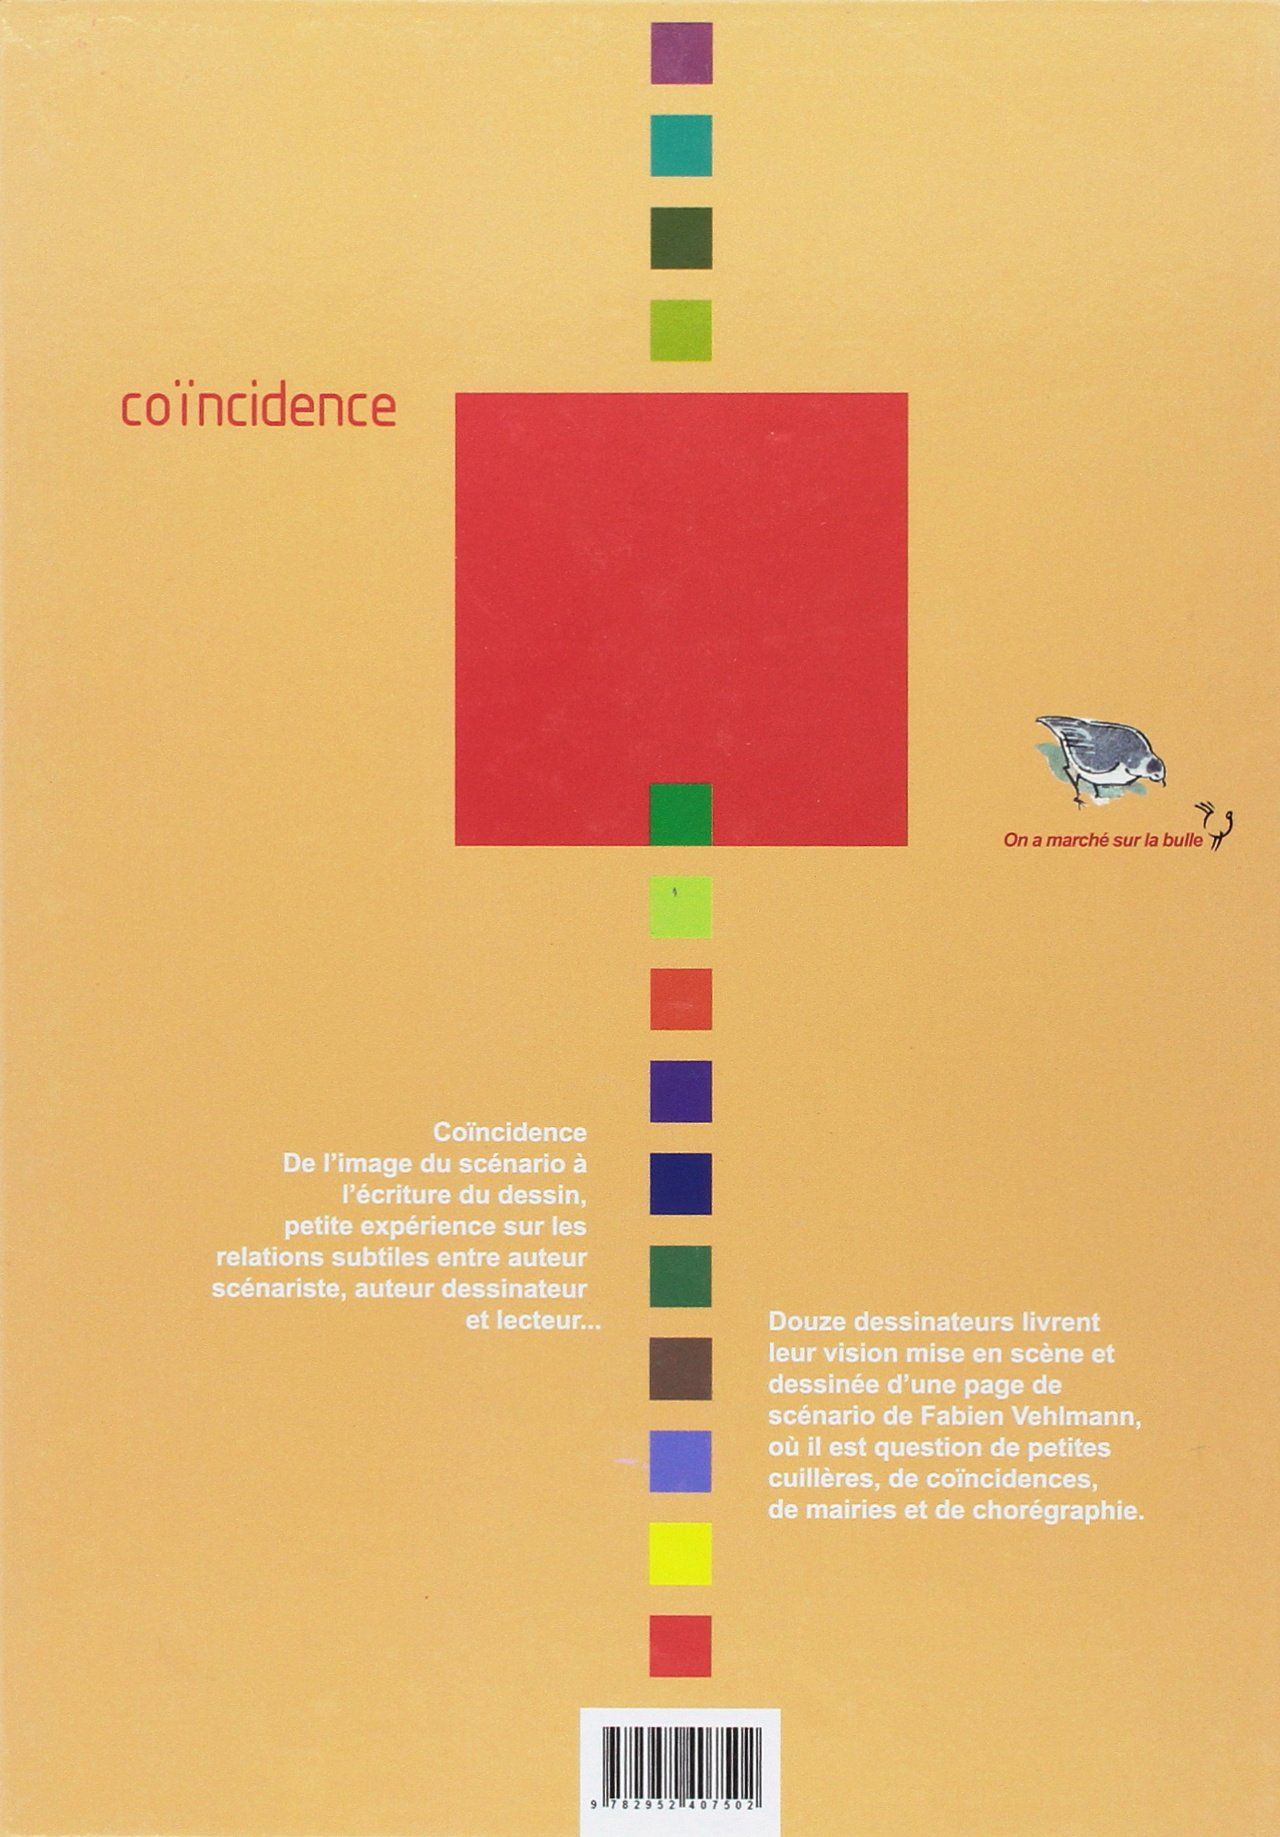 Verso de l'album Coïncidence